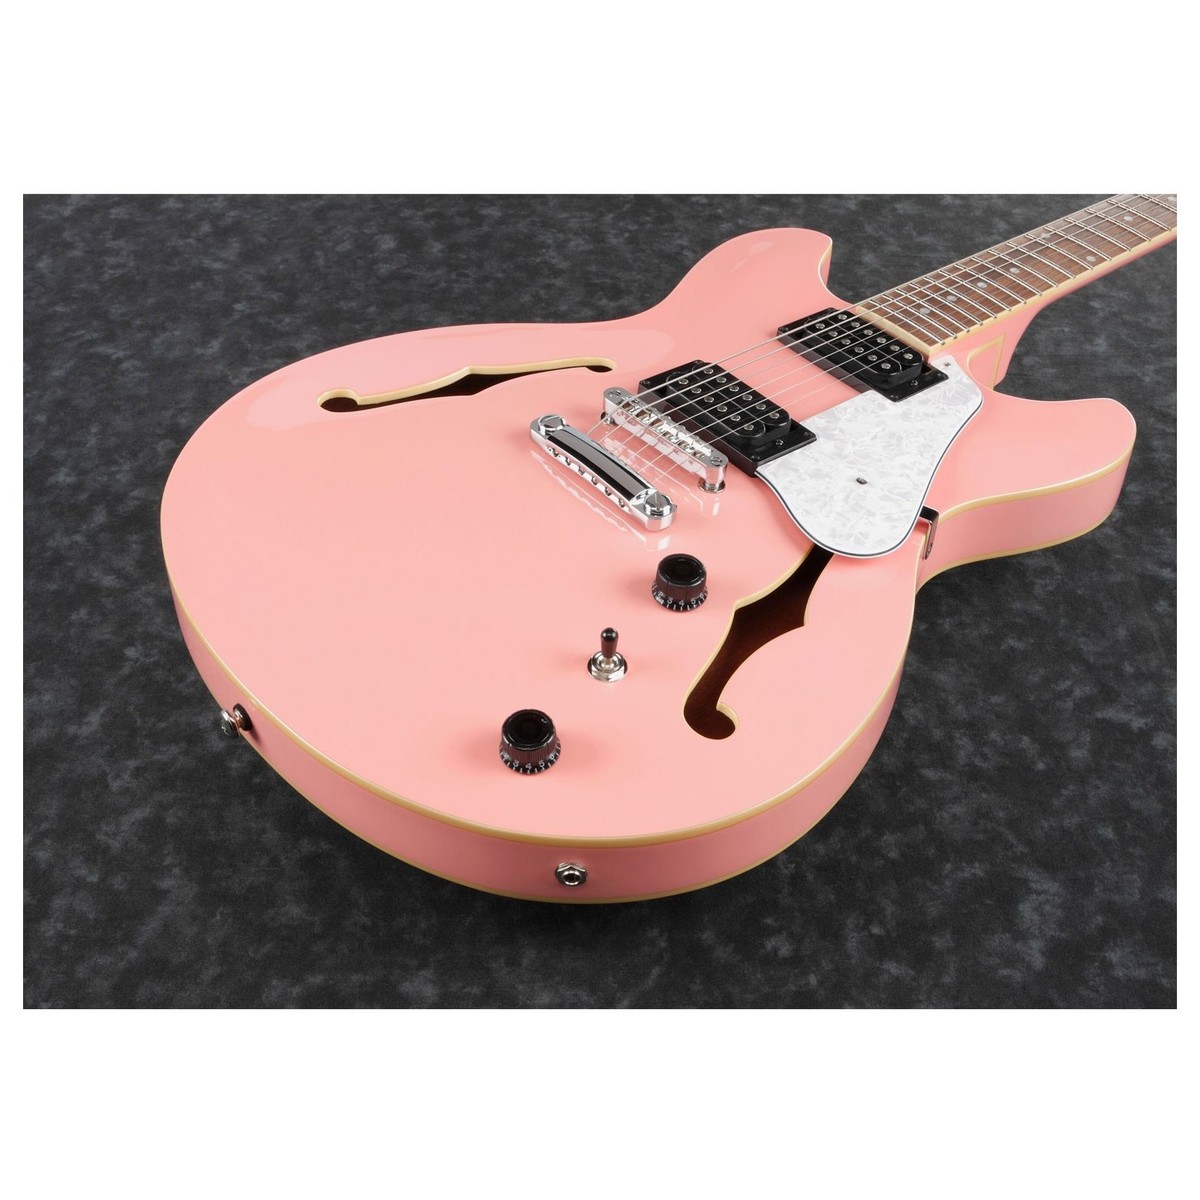 Ibanez As63 Crp Artcore Hh Ht Lau - Coral Pink - Semi hollow elektriche gitaar - Variation 1